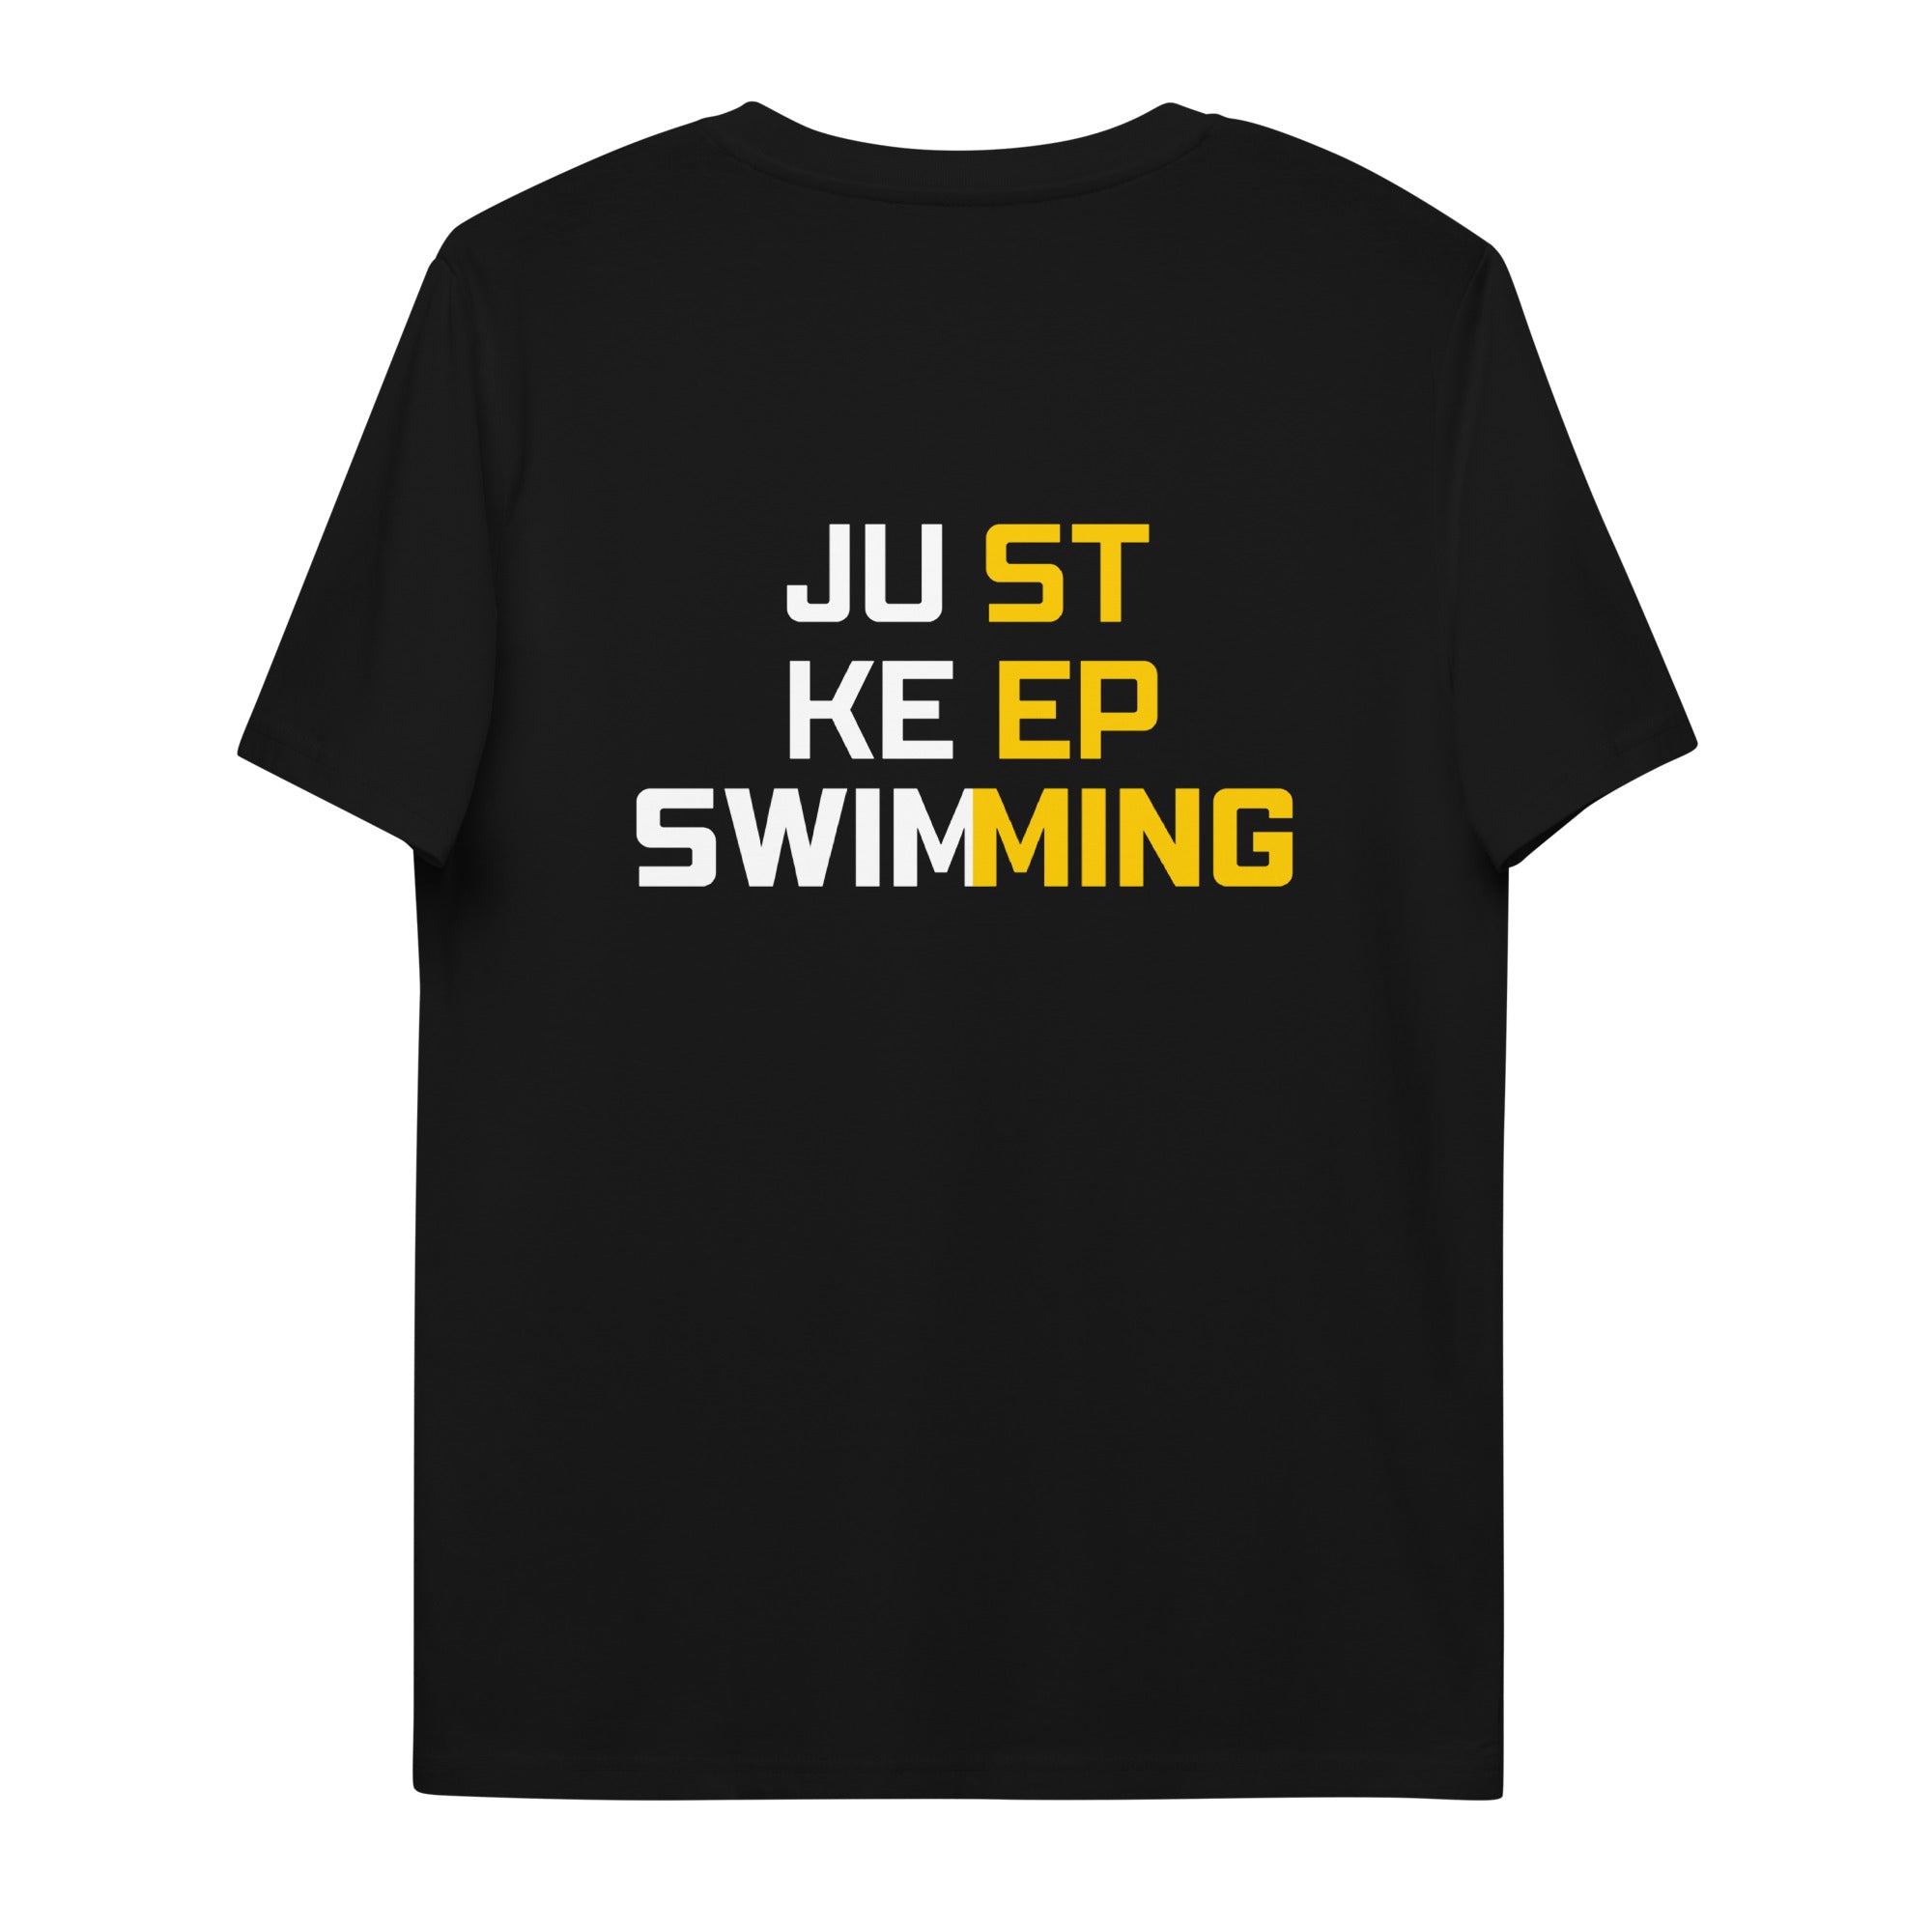 Just Keep Swimming - Unisex organic cotton t-shirt